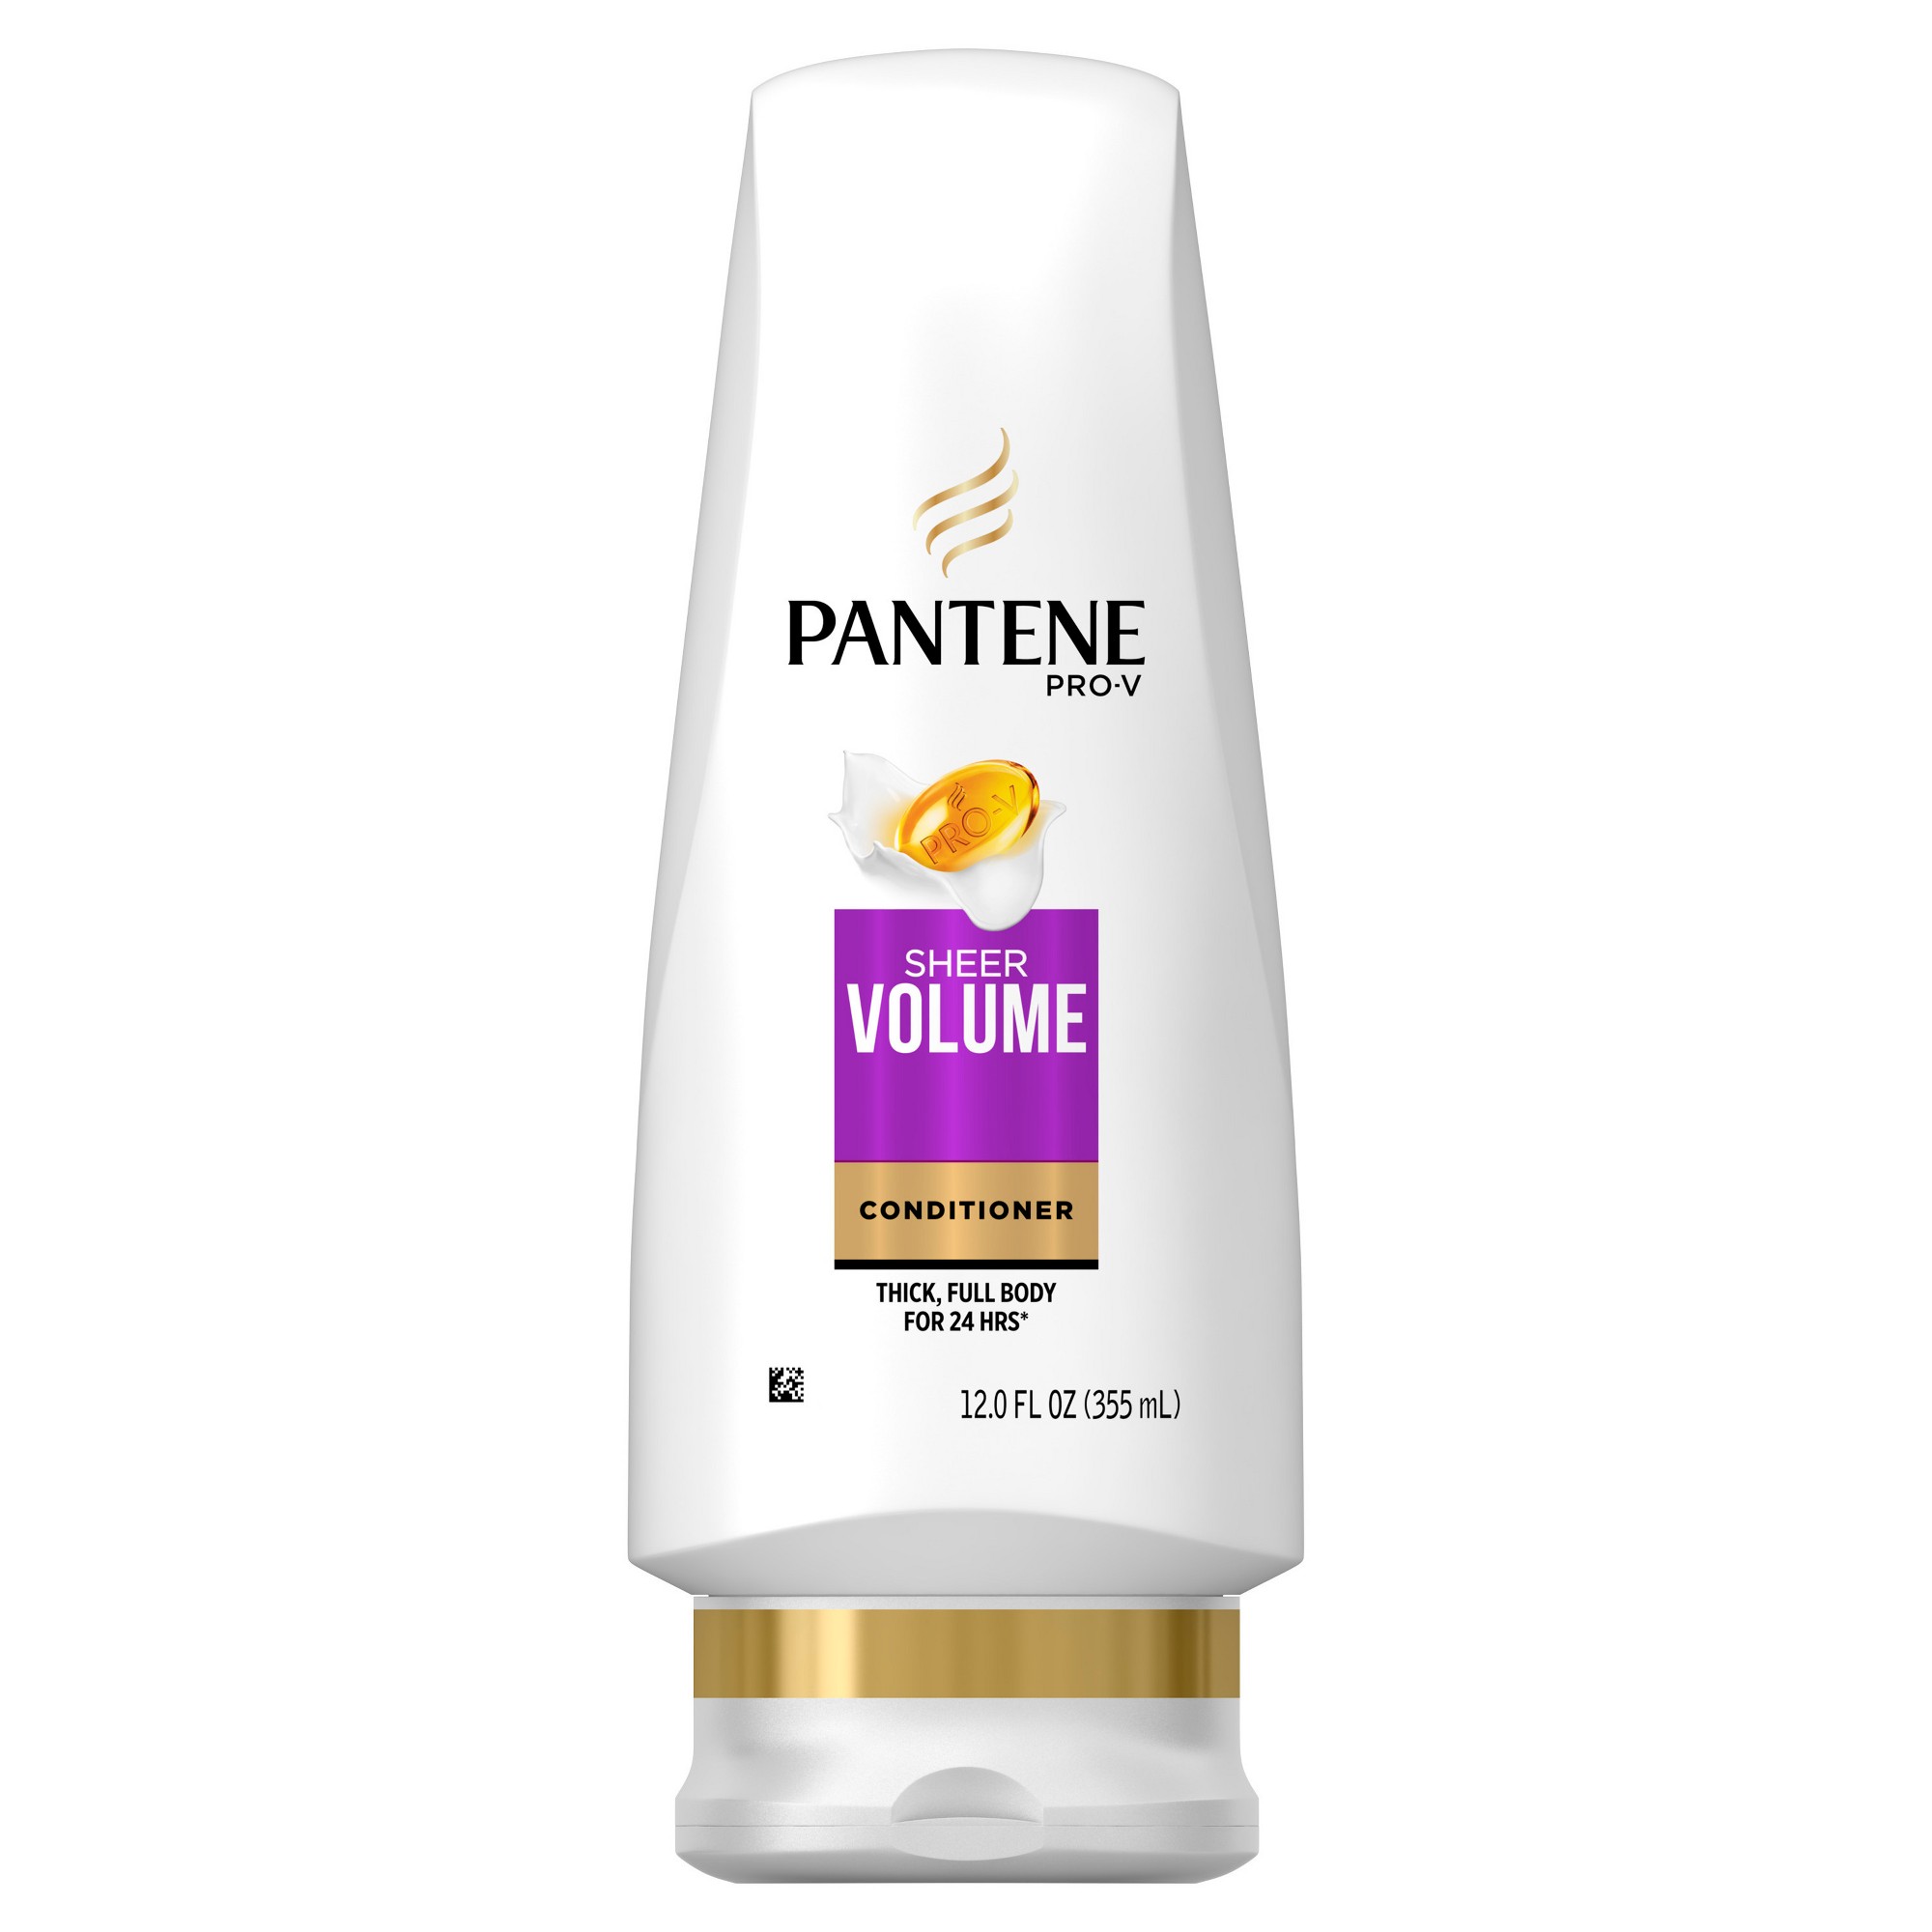 Pantene Pro-V Sheer Volume Conditioner - 12oz